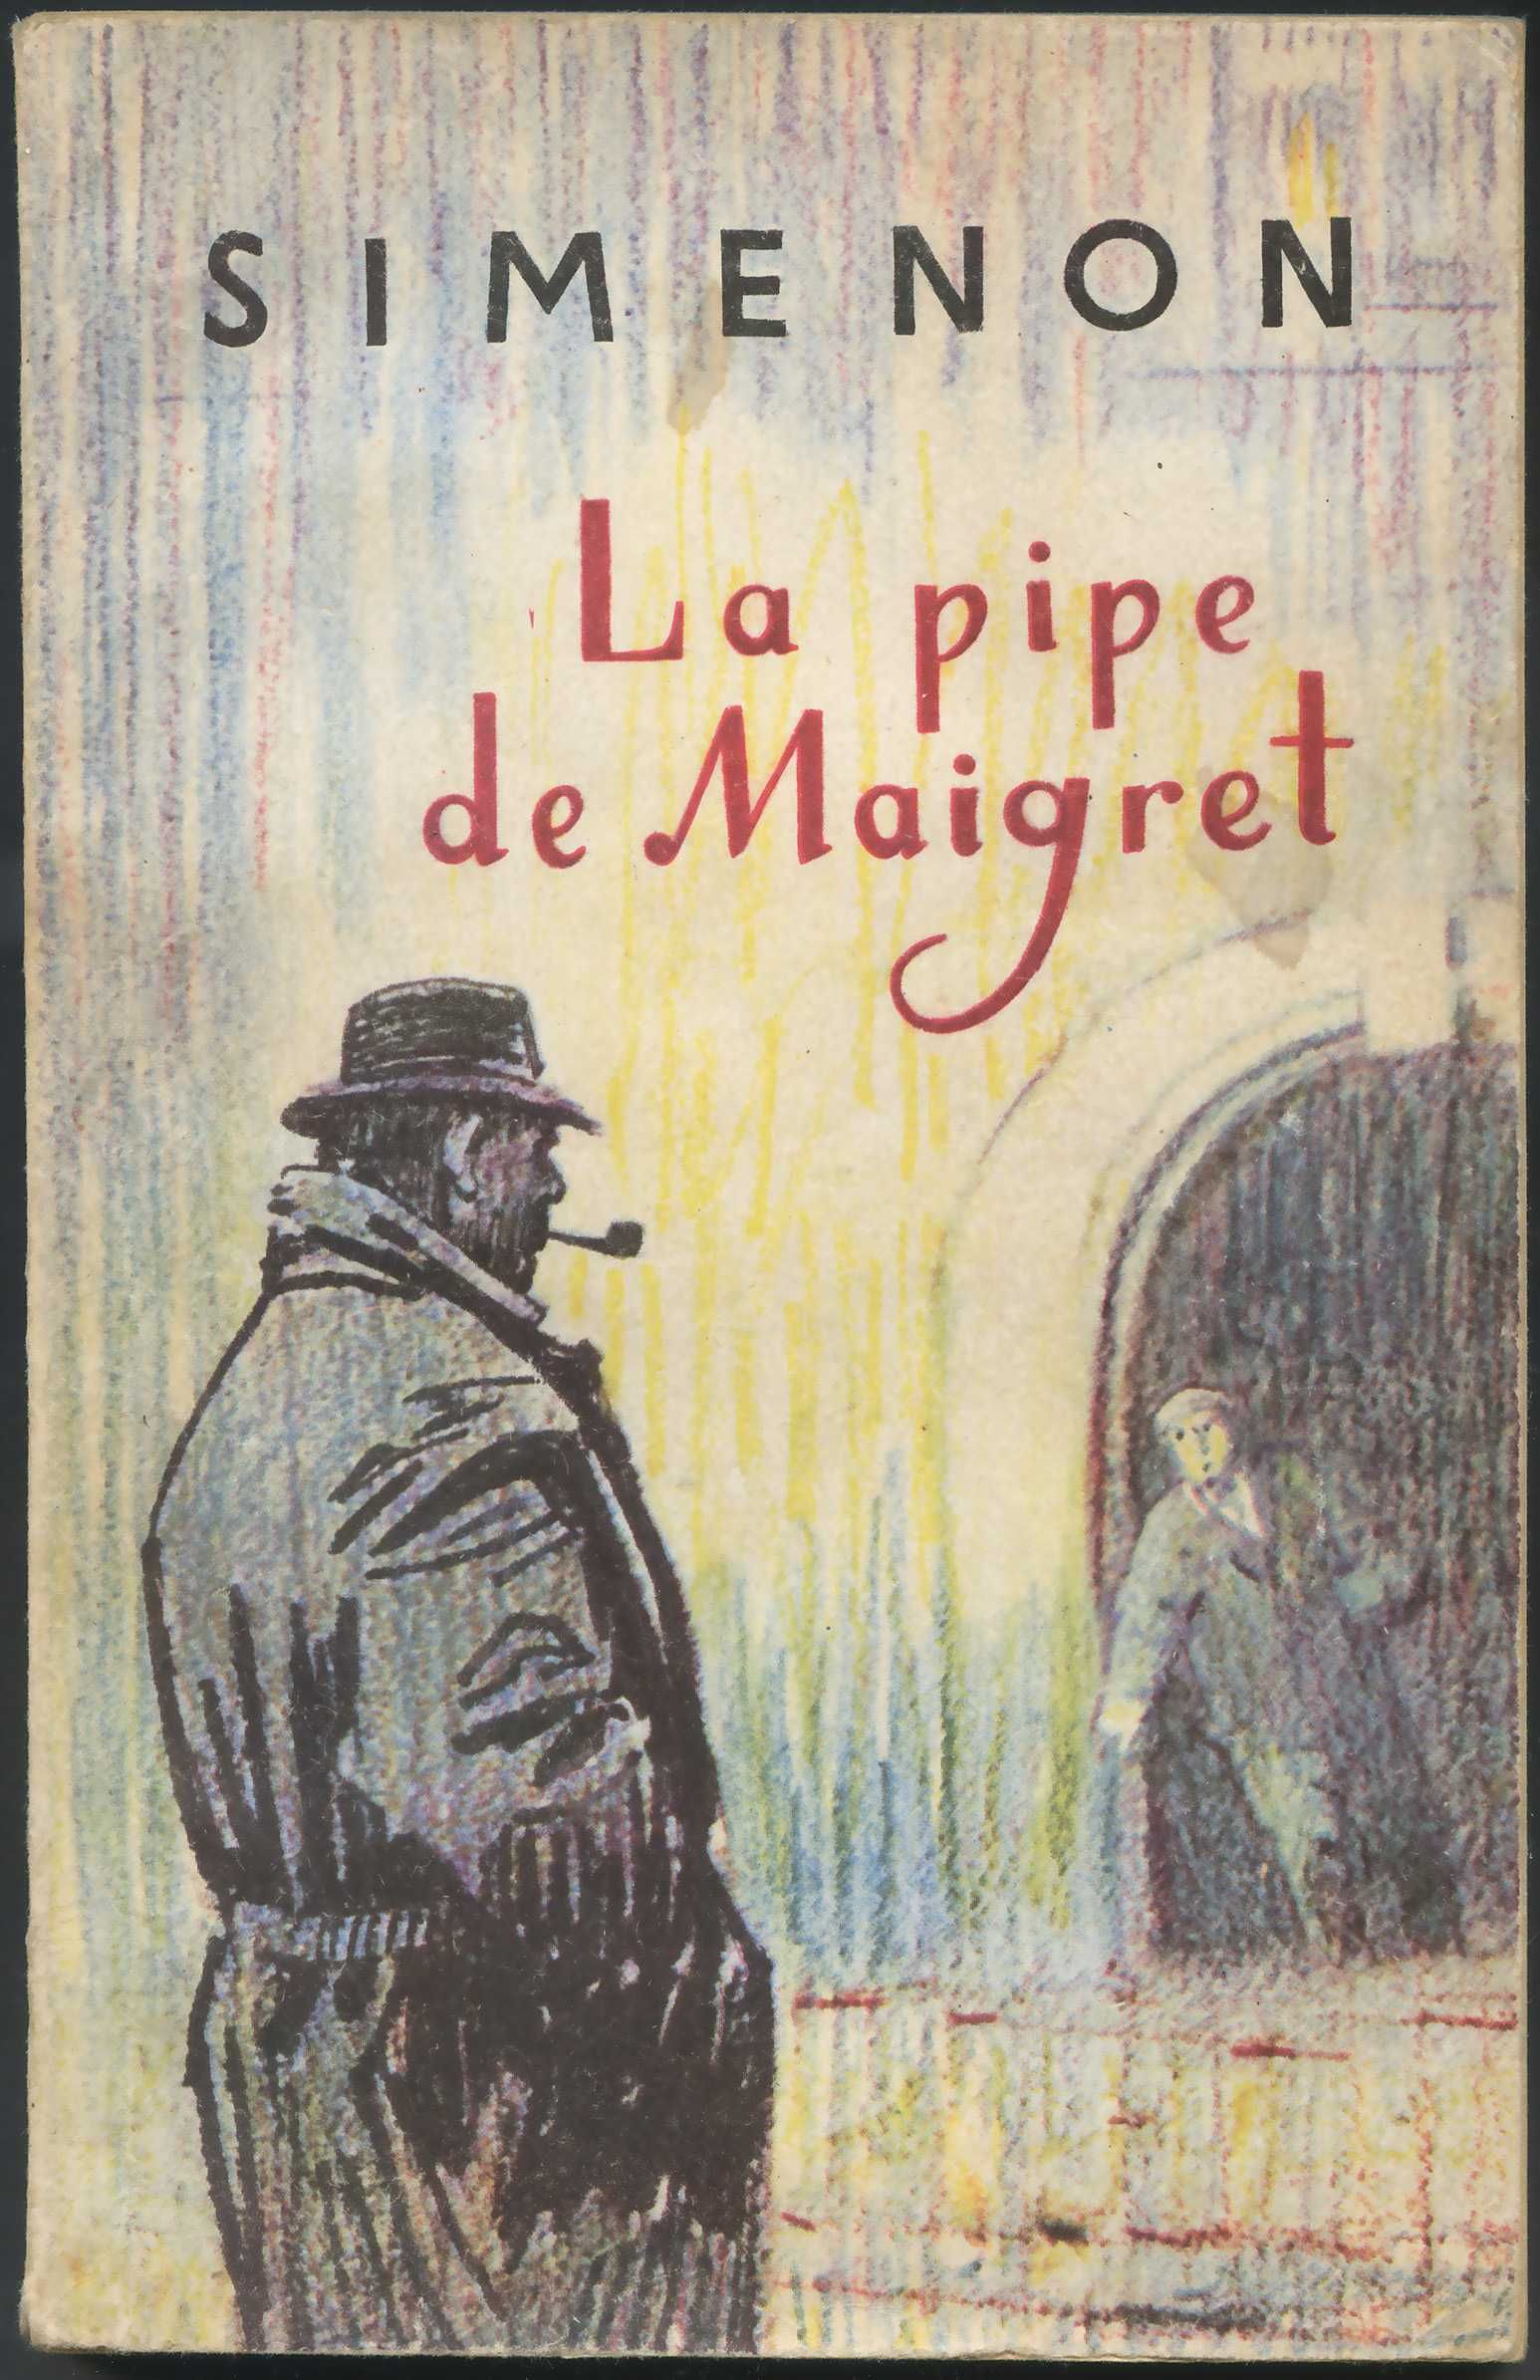 Книжка. Simenon. La pipe de Maigret. 1966. Фр. яз. 160 с.